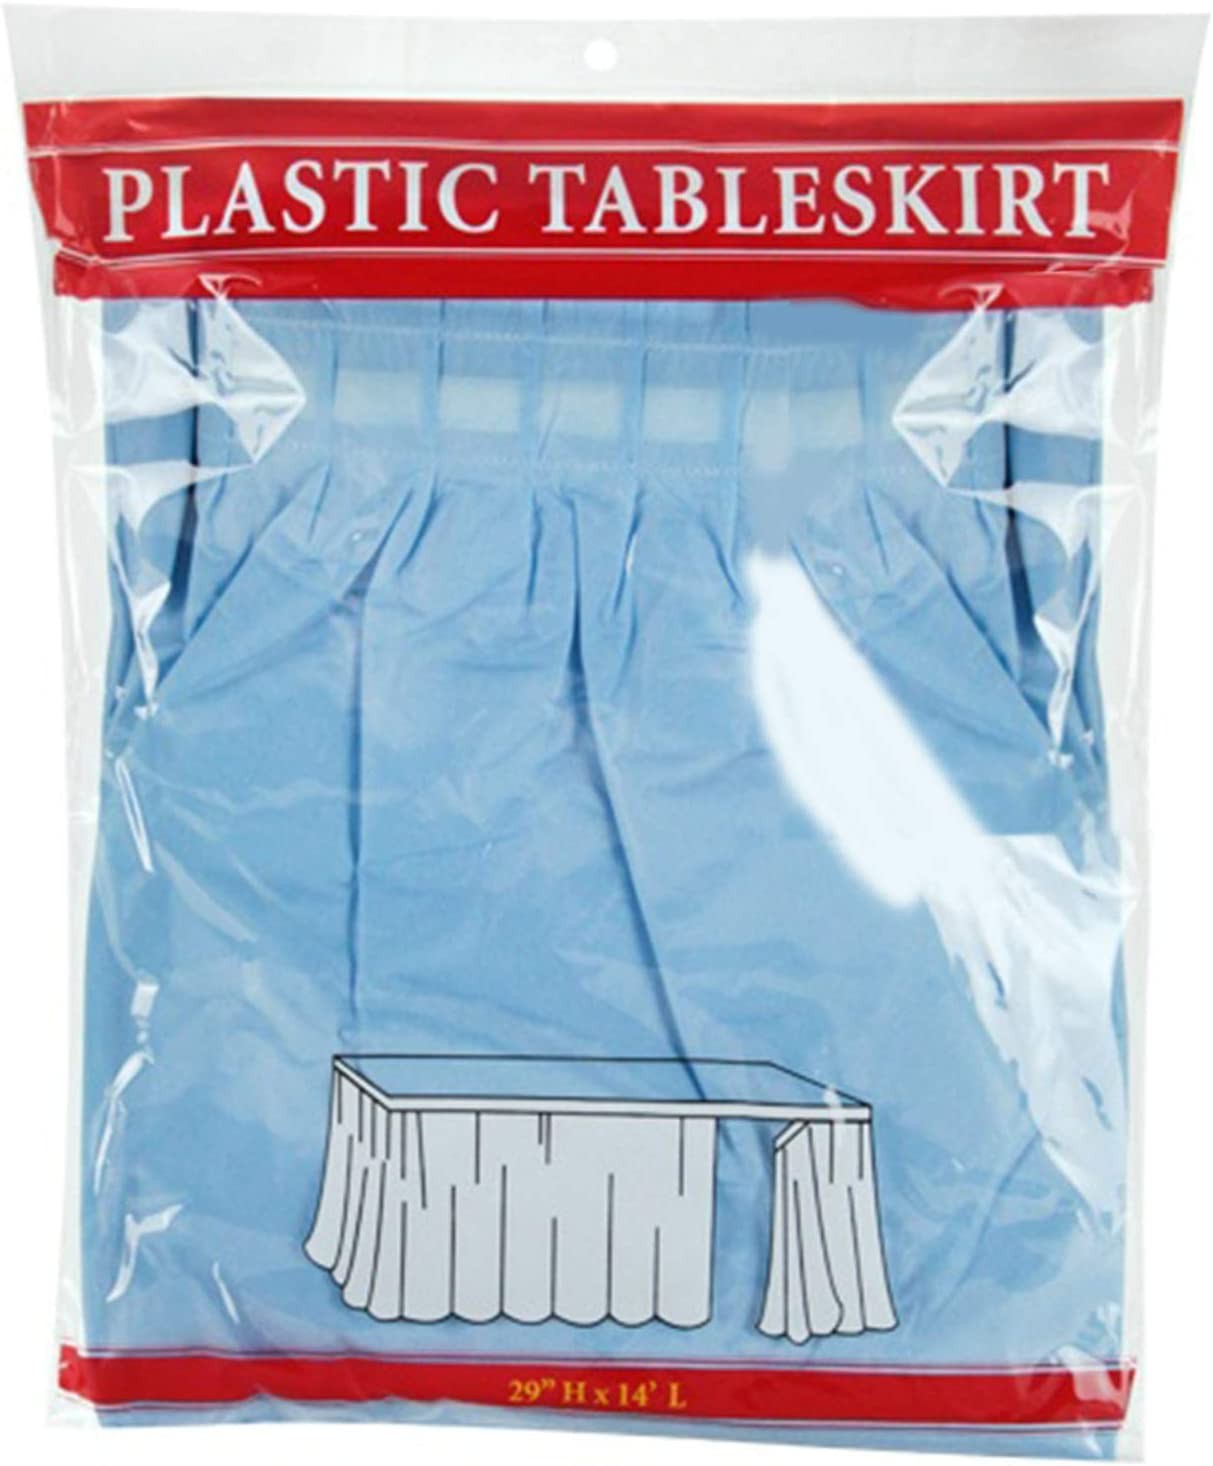 TigerChef Light Blue Plastic Table Skirt 14" x 29" - 12/Pack